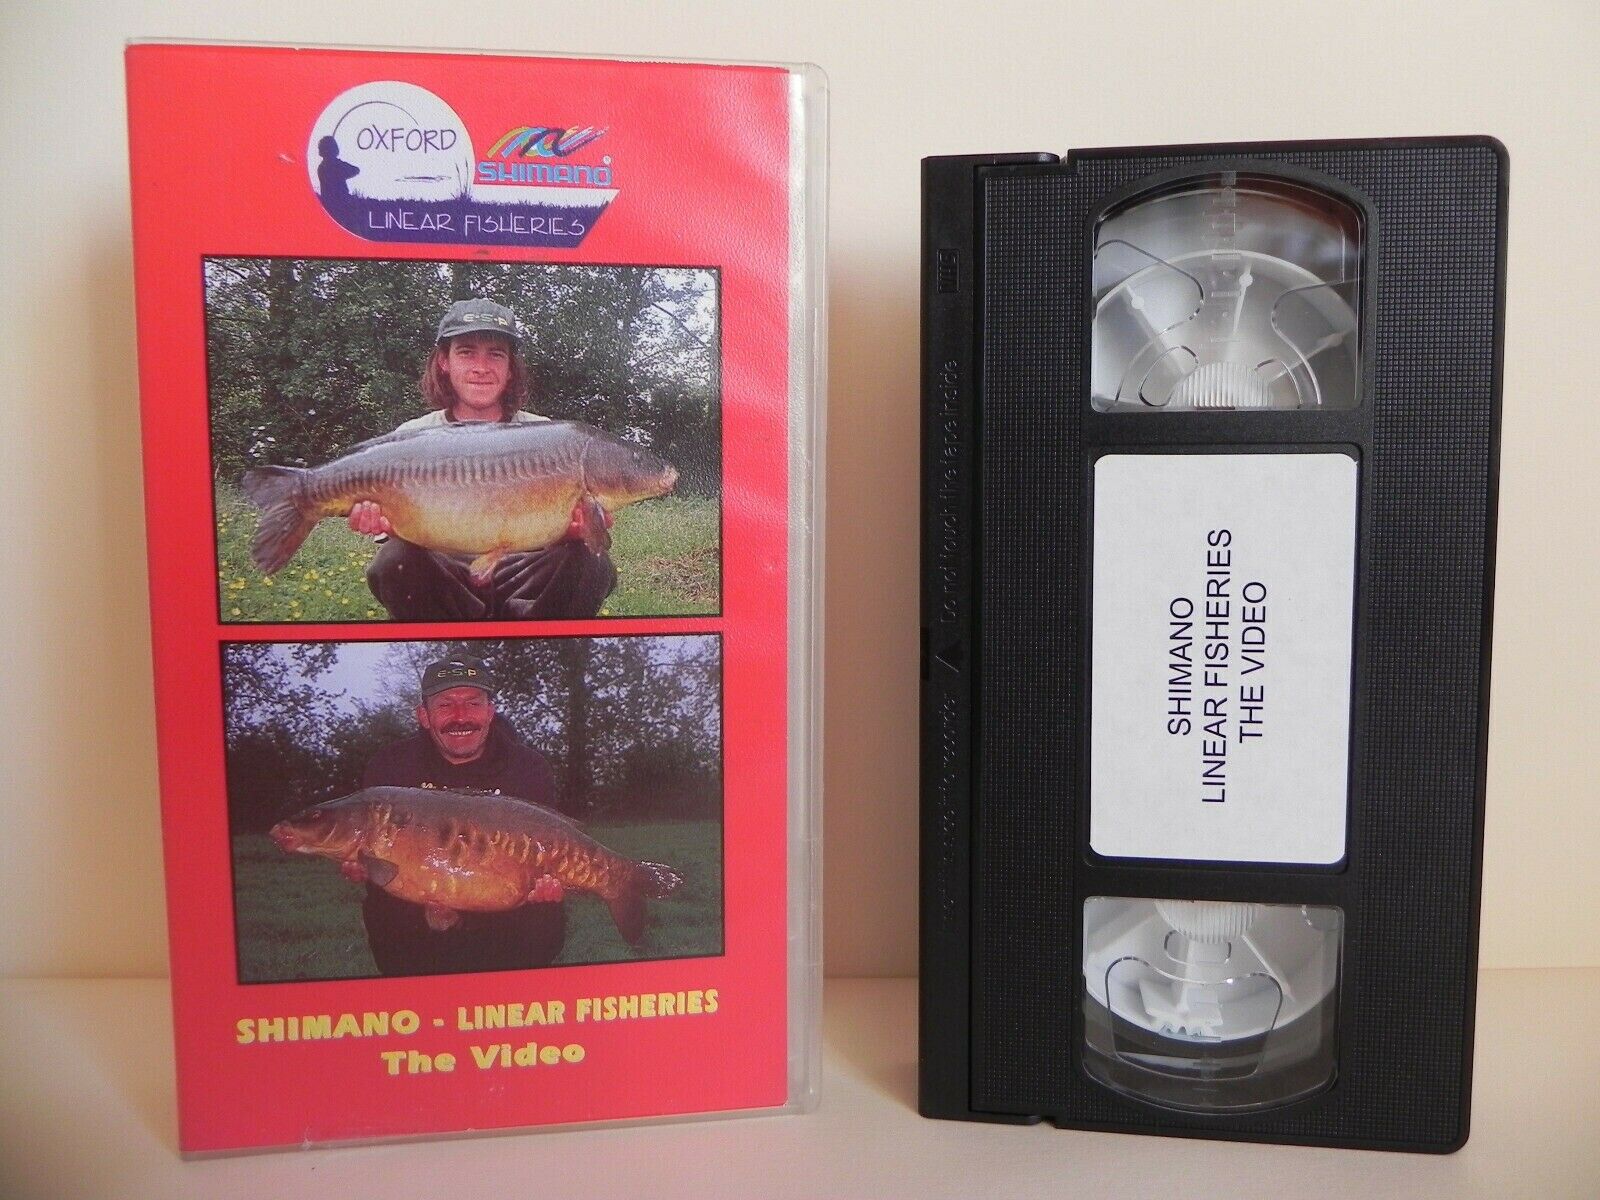 Shimano - Linear Fisheries - Fishing - Chris Ball - Witney Oxford - Pal VHS-